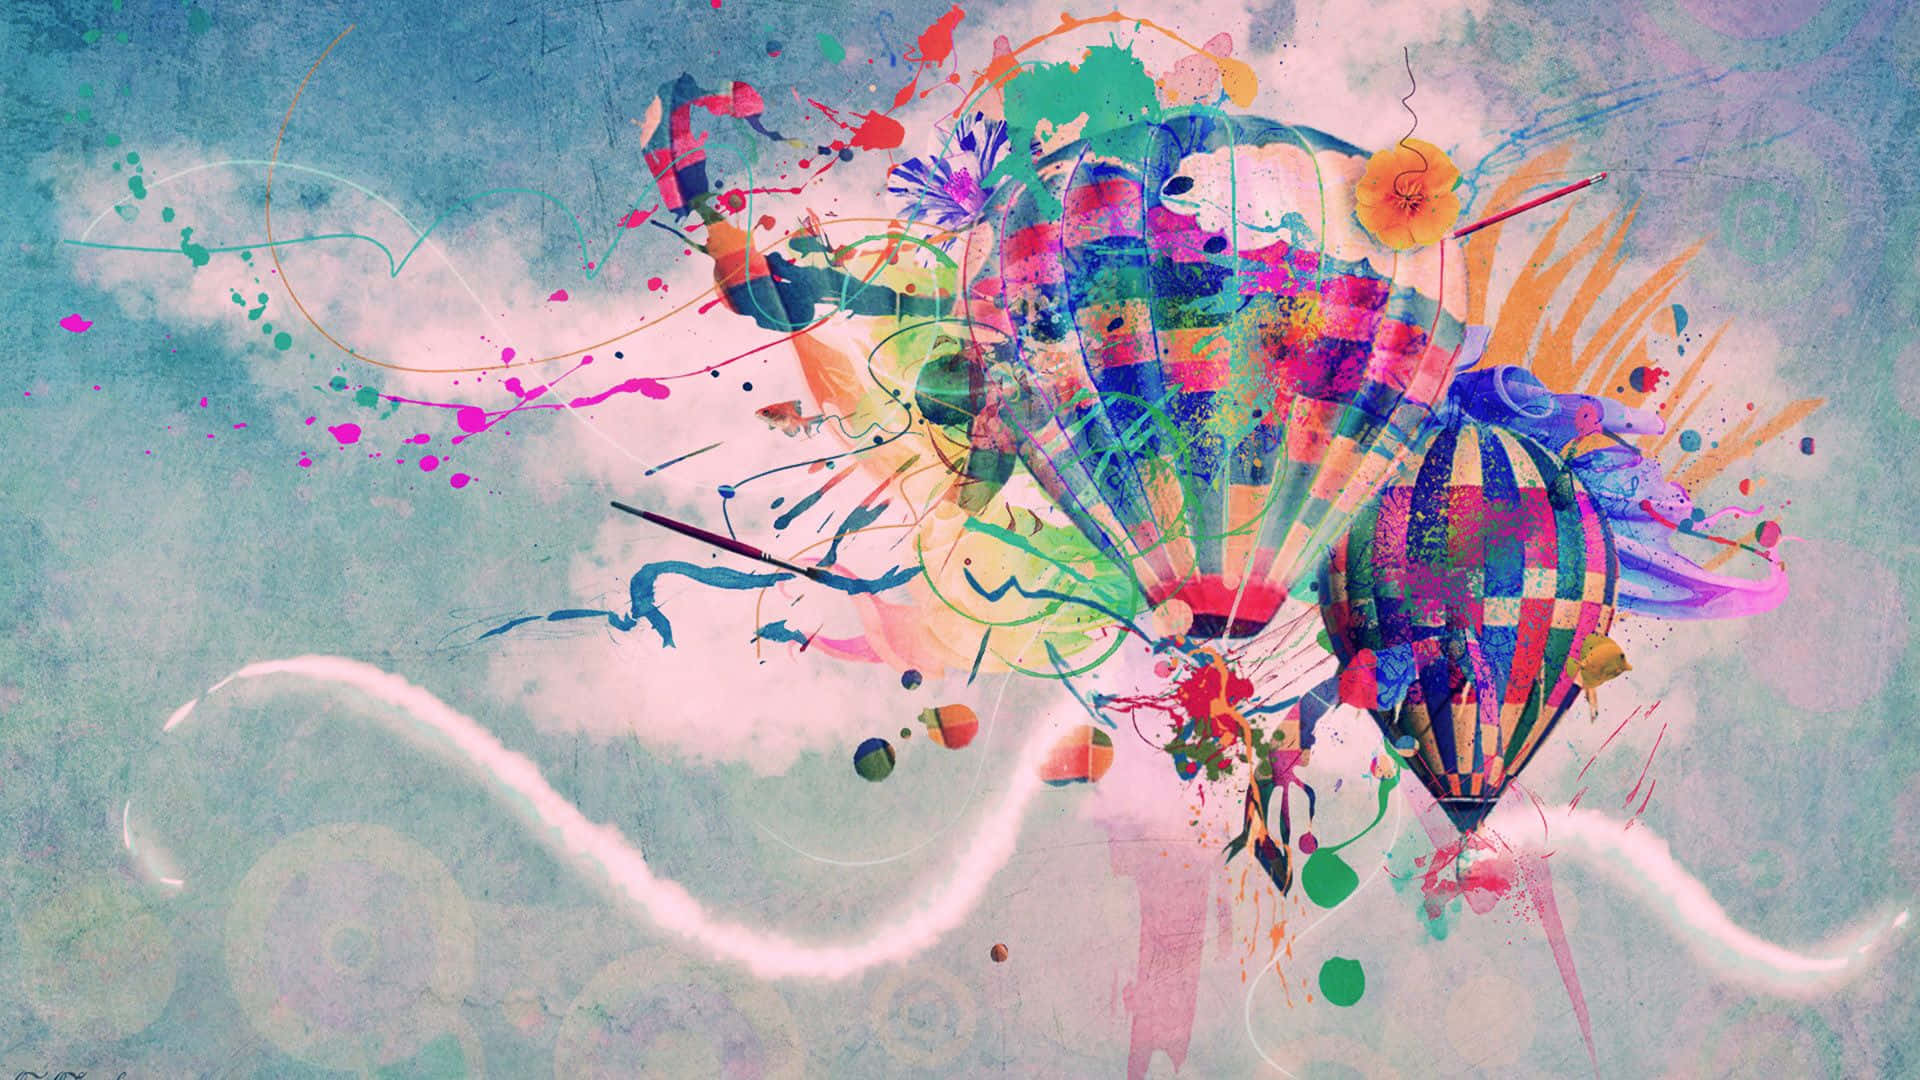 "Vibrant Balloon Background"